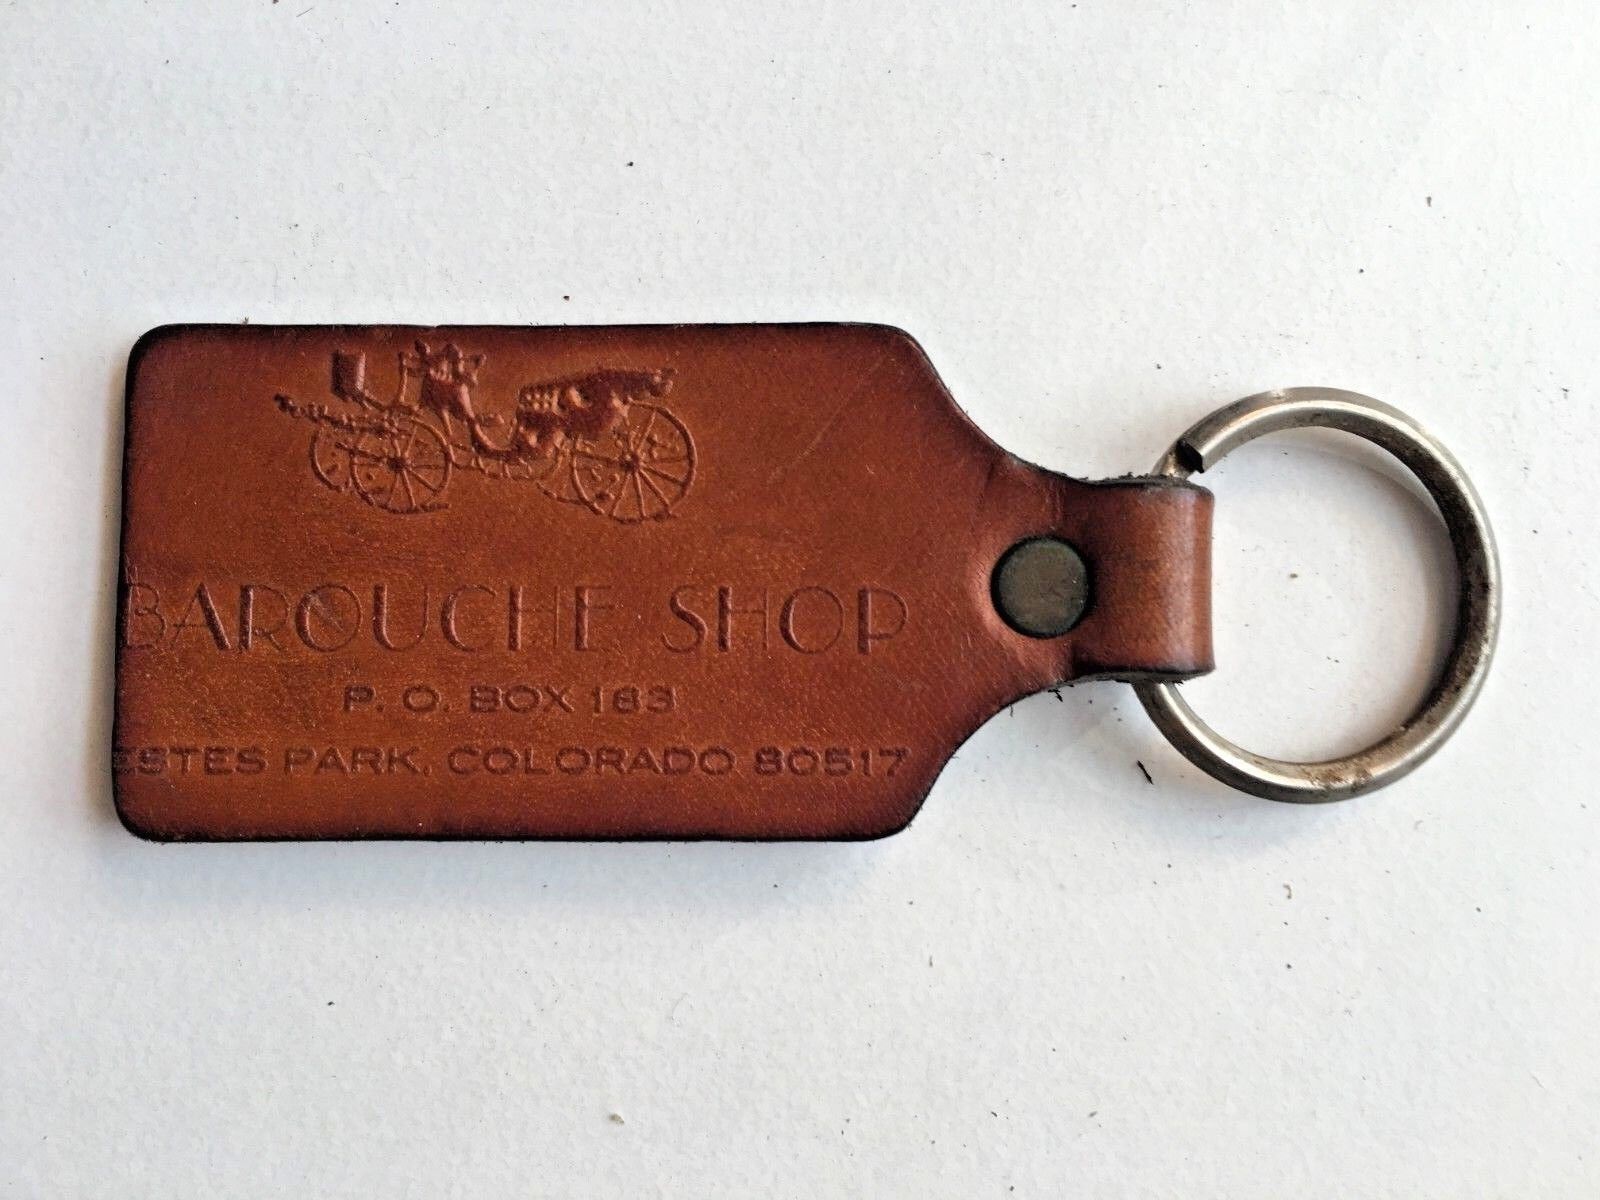 Vintage VTG Genuine Stamped Leather Keychain Barouche Shop Estes Park Colorado